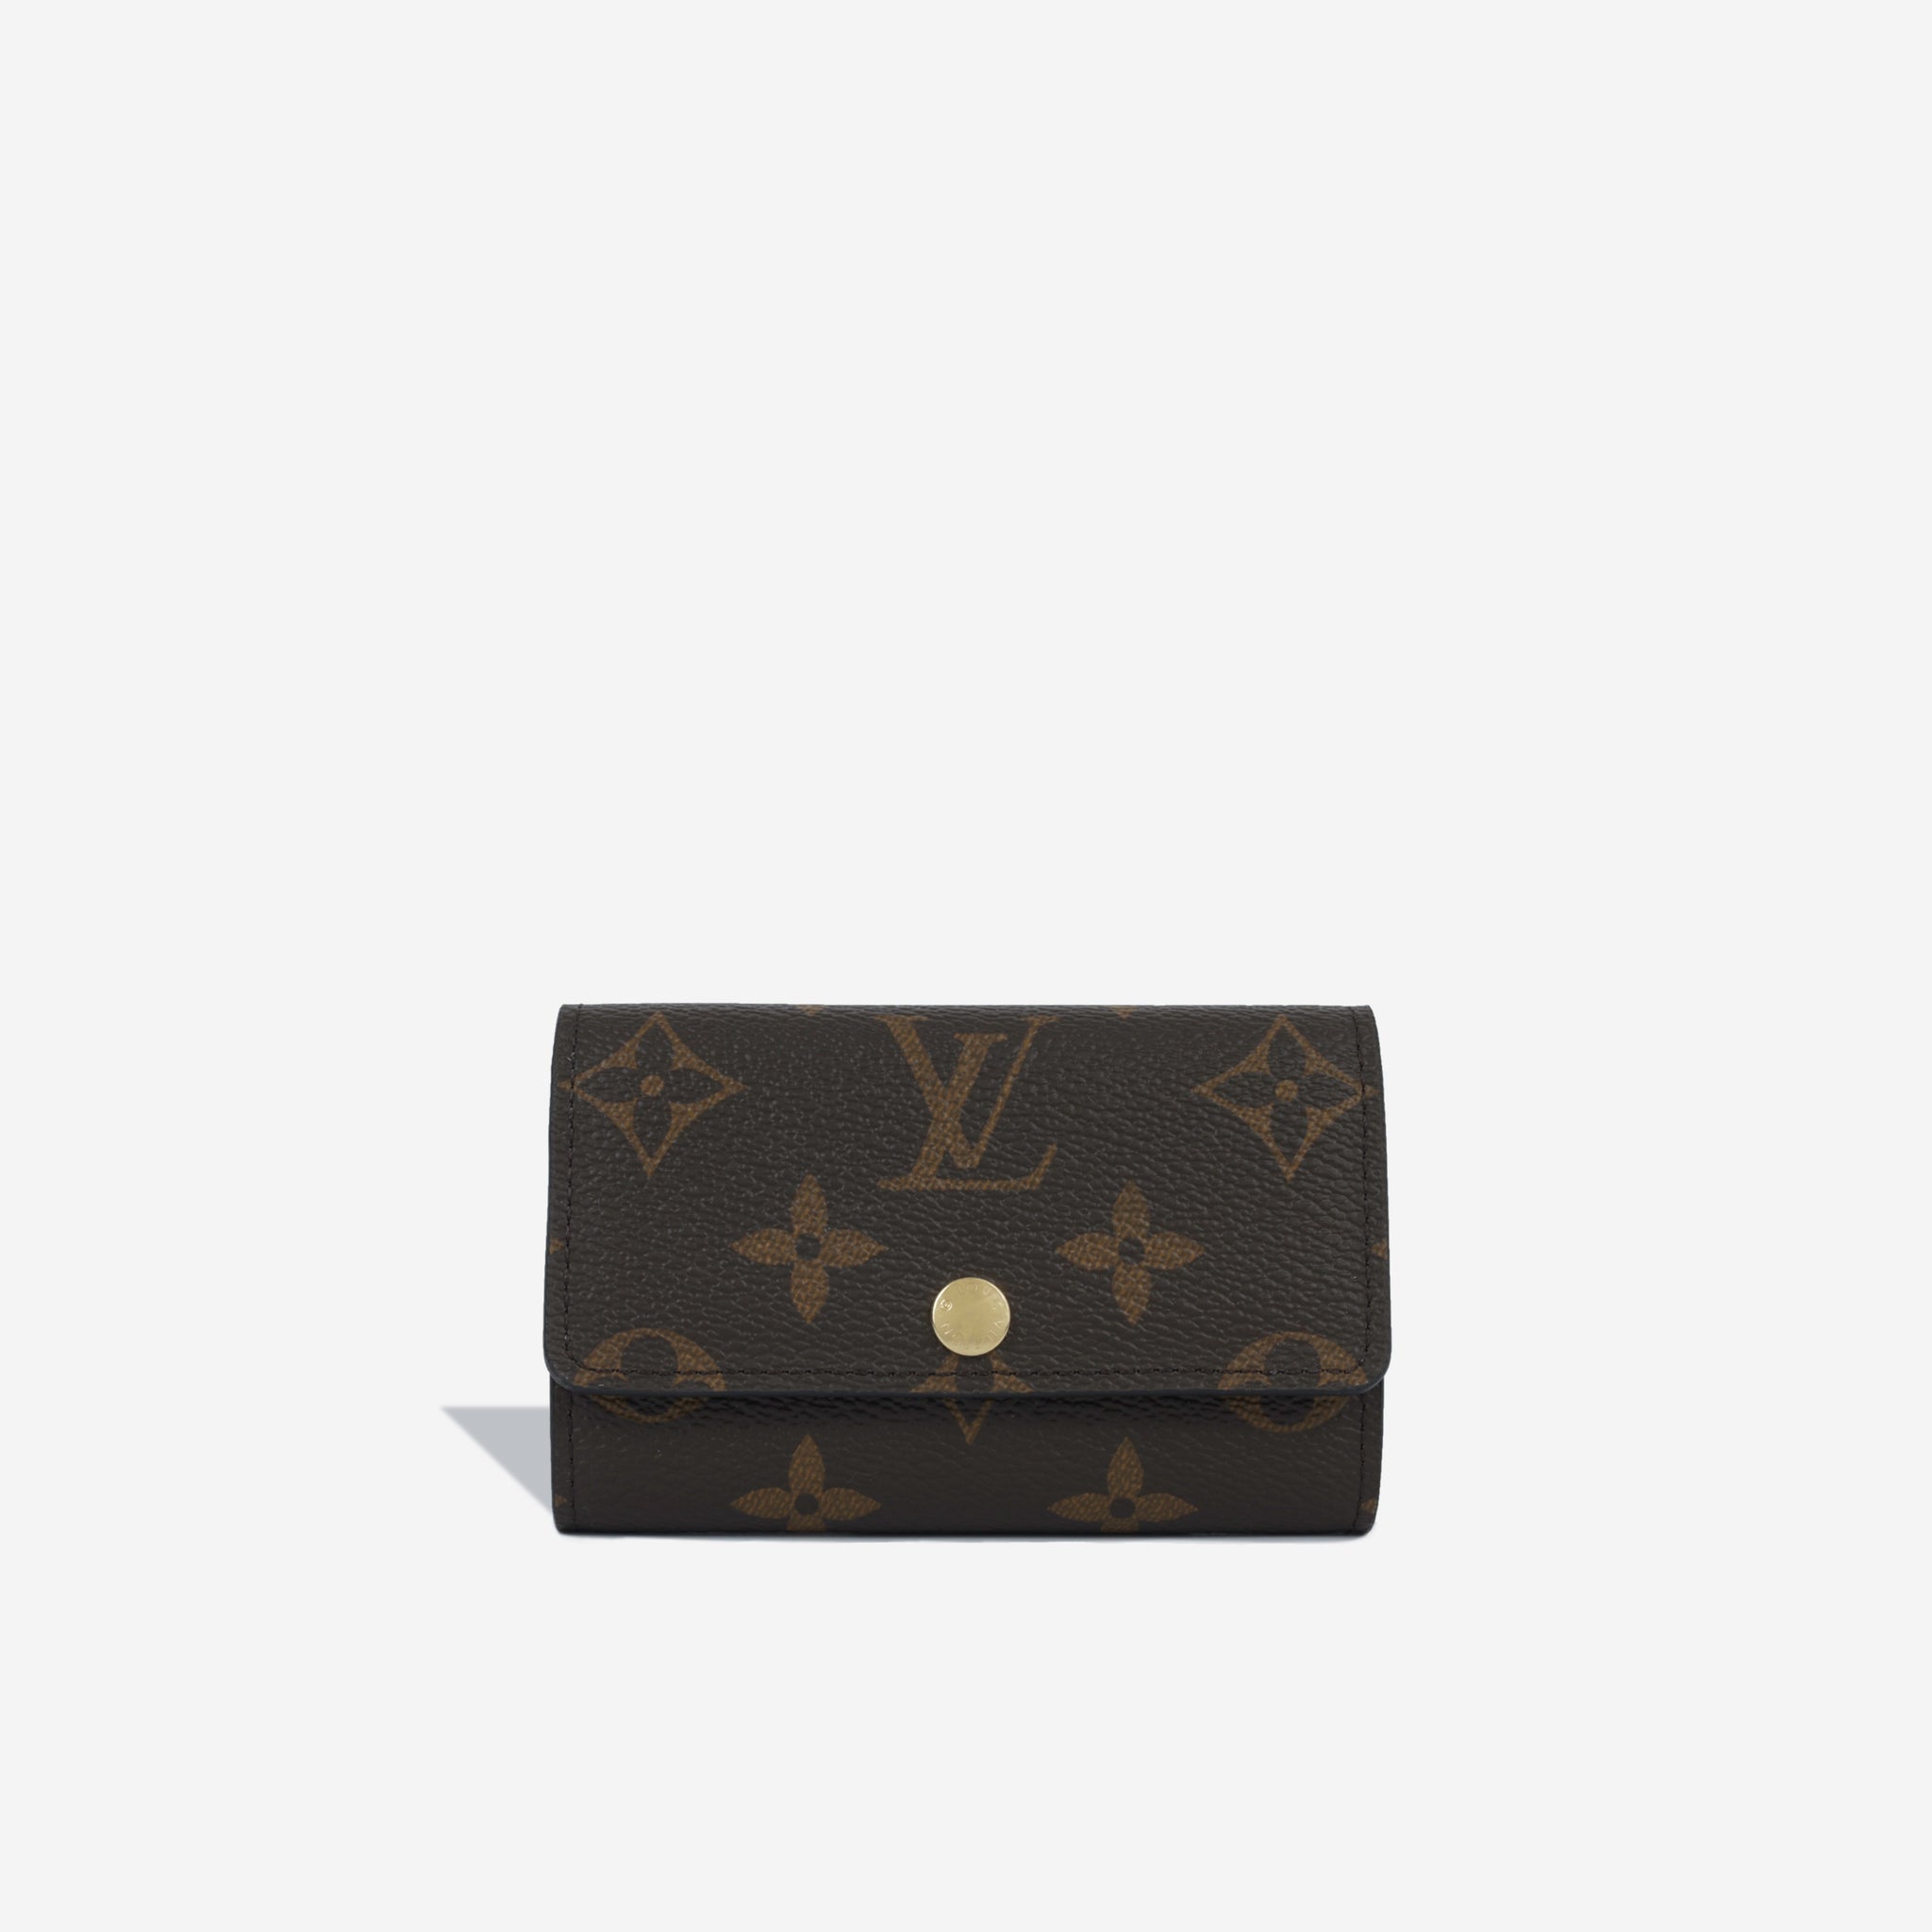 Louis Vuitton - 6 Key Holder - Monogram Canvas GHW - Pre-loved